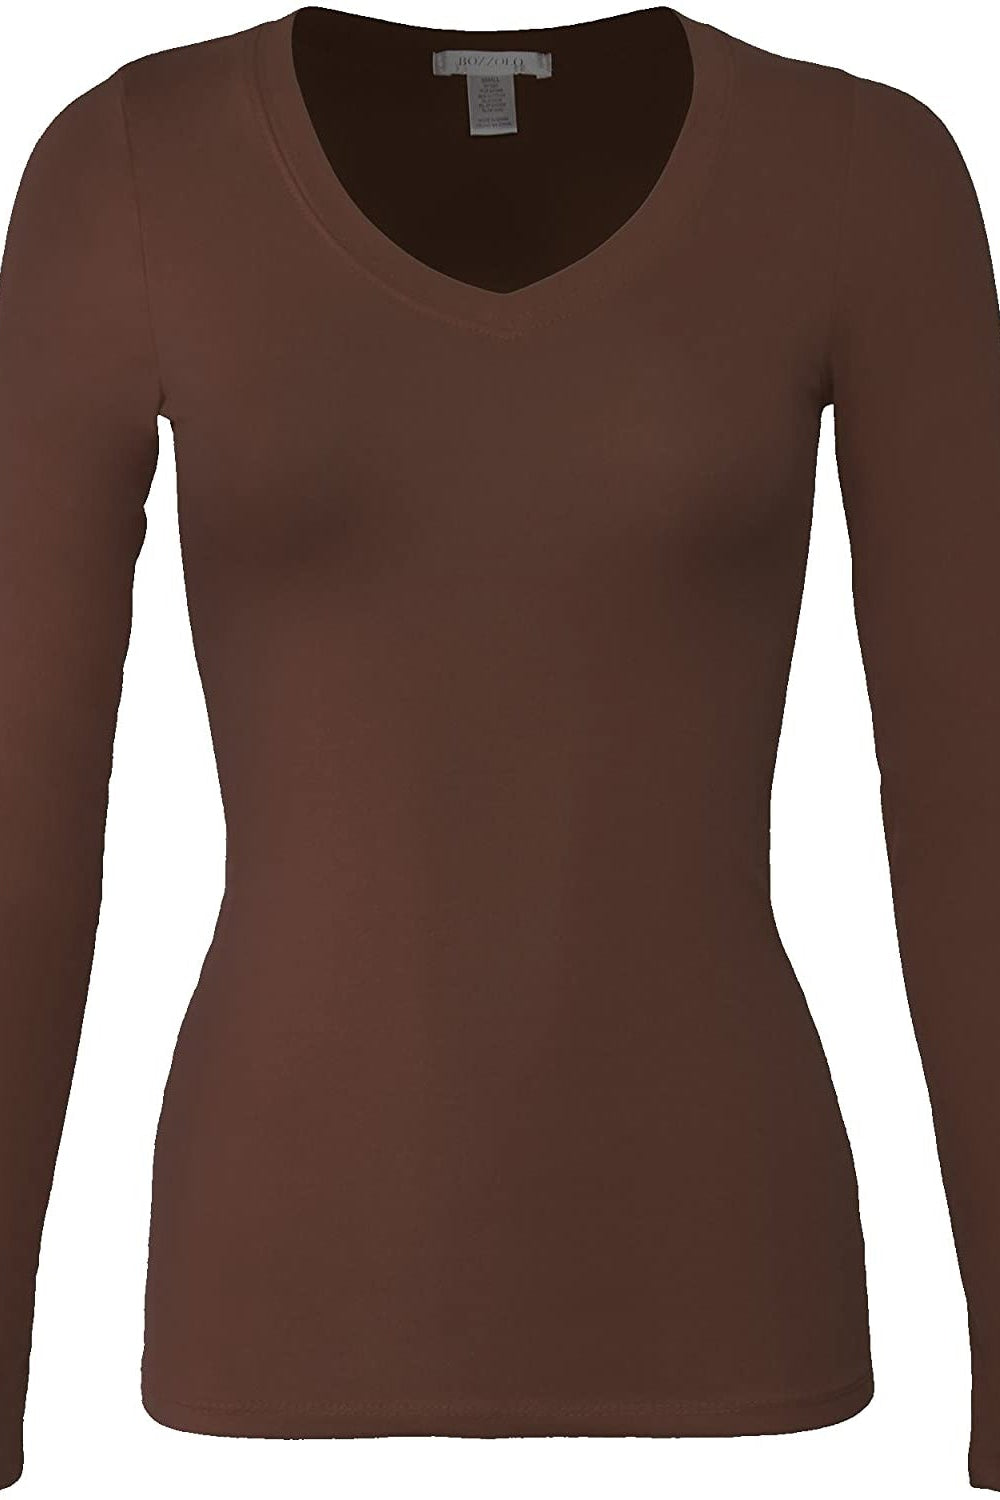 Long-sleeved t-shirt jewelled detail chestnut brown ladies